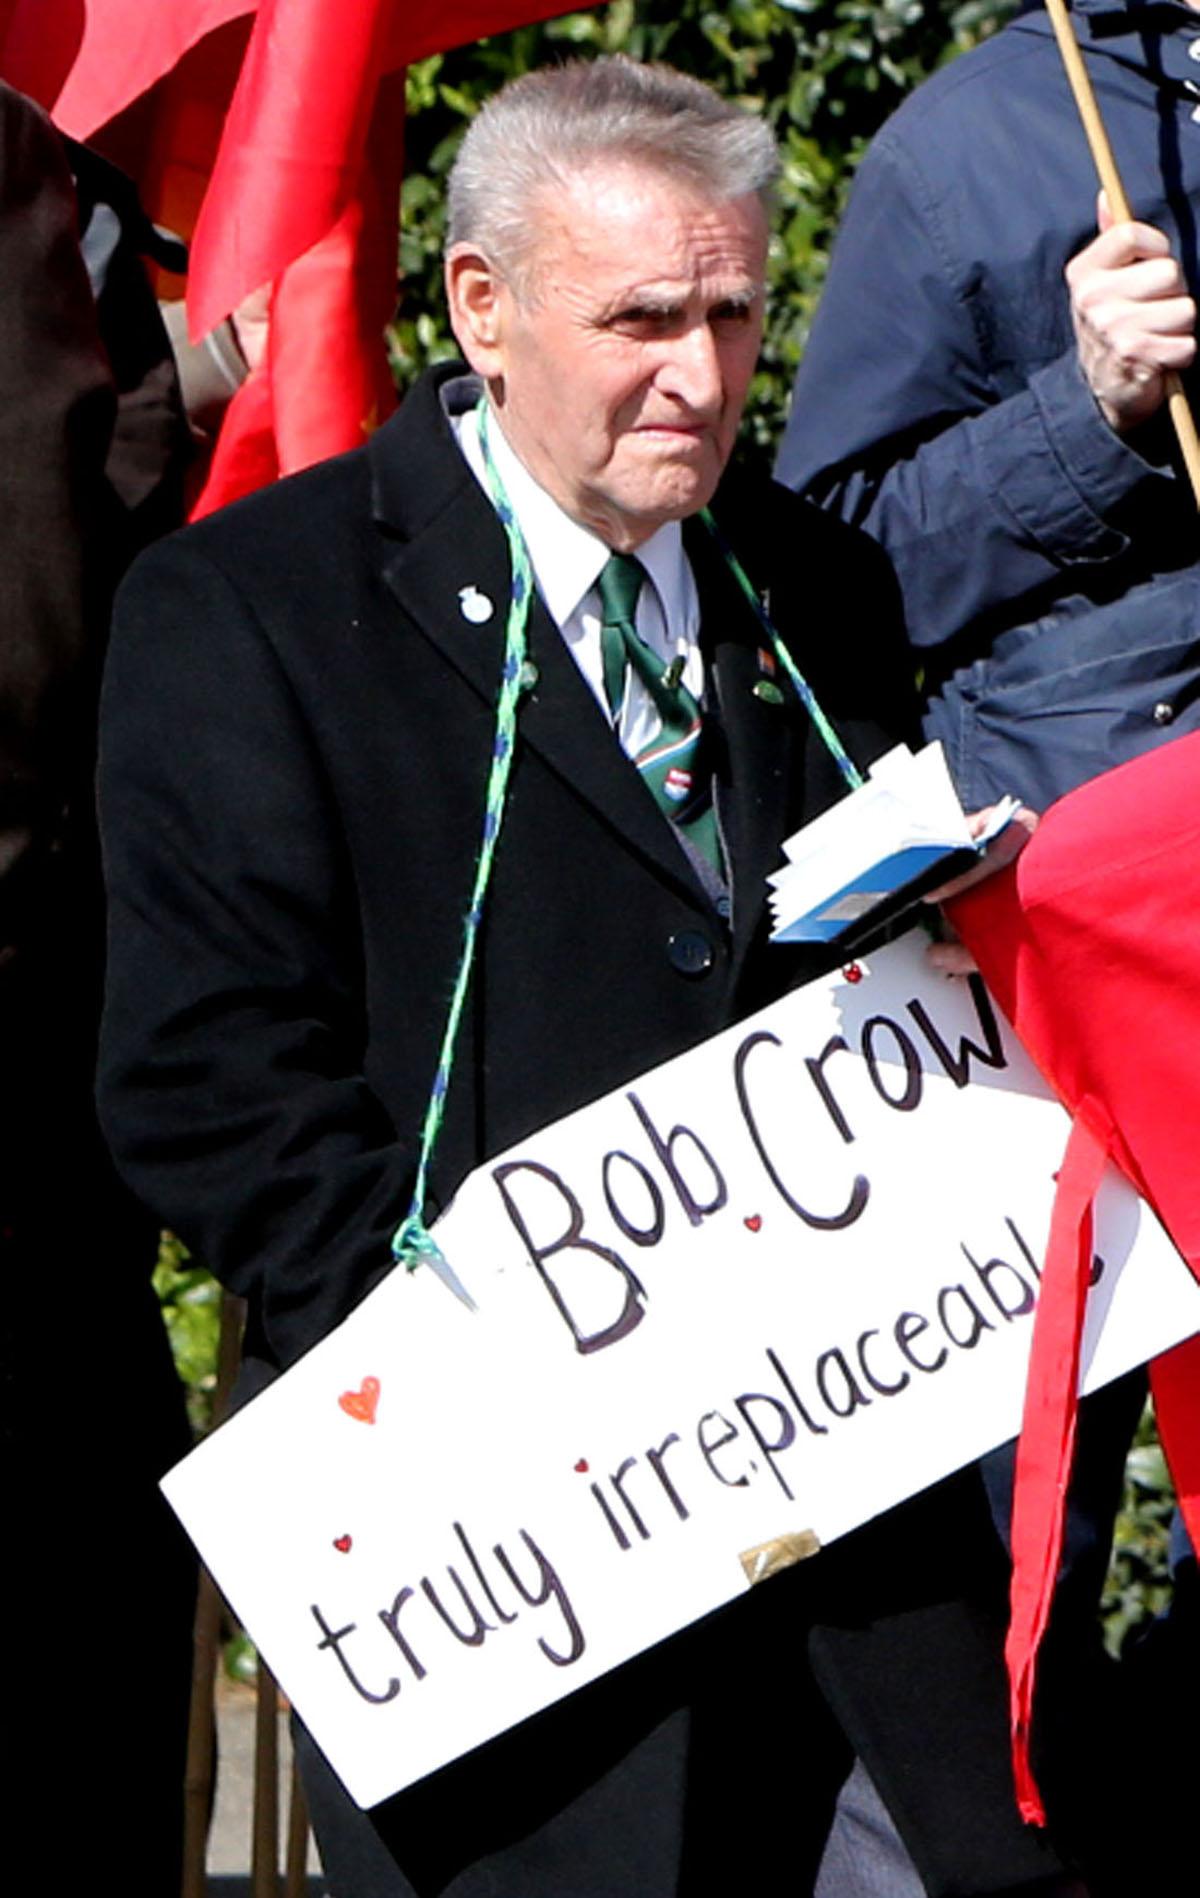 Union leader Bob Crow's funeral procession